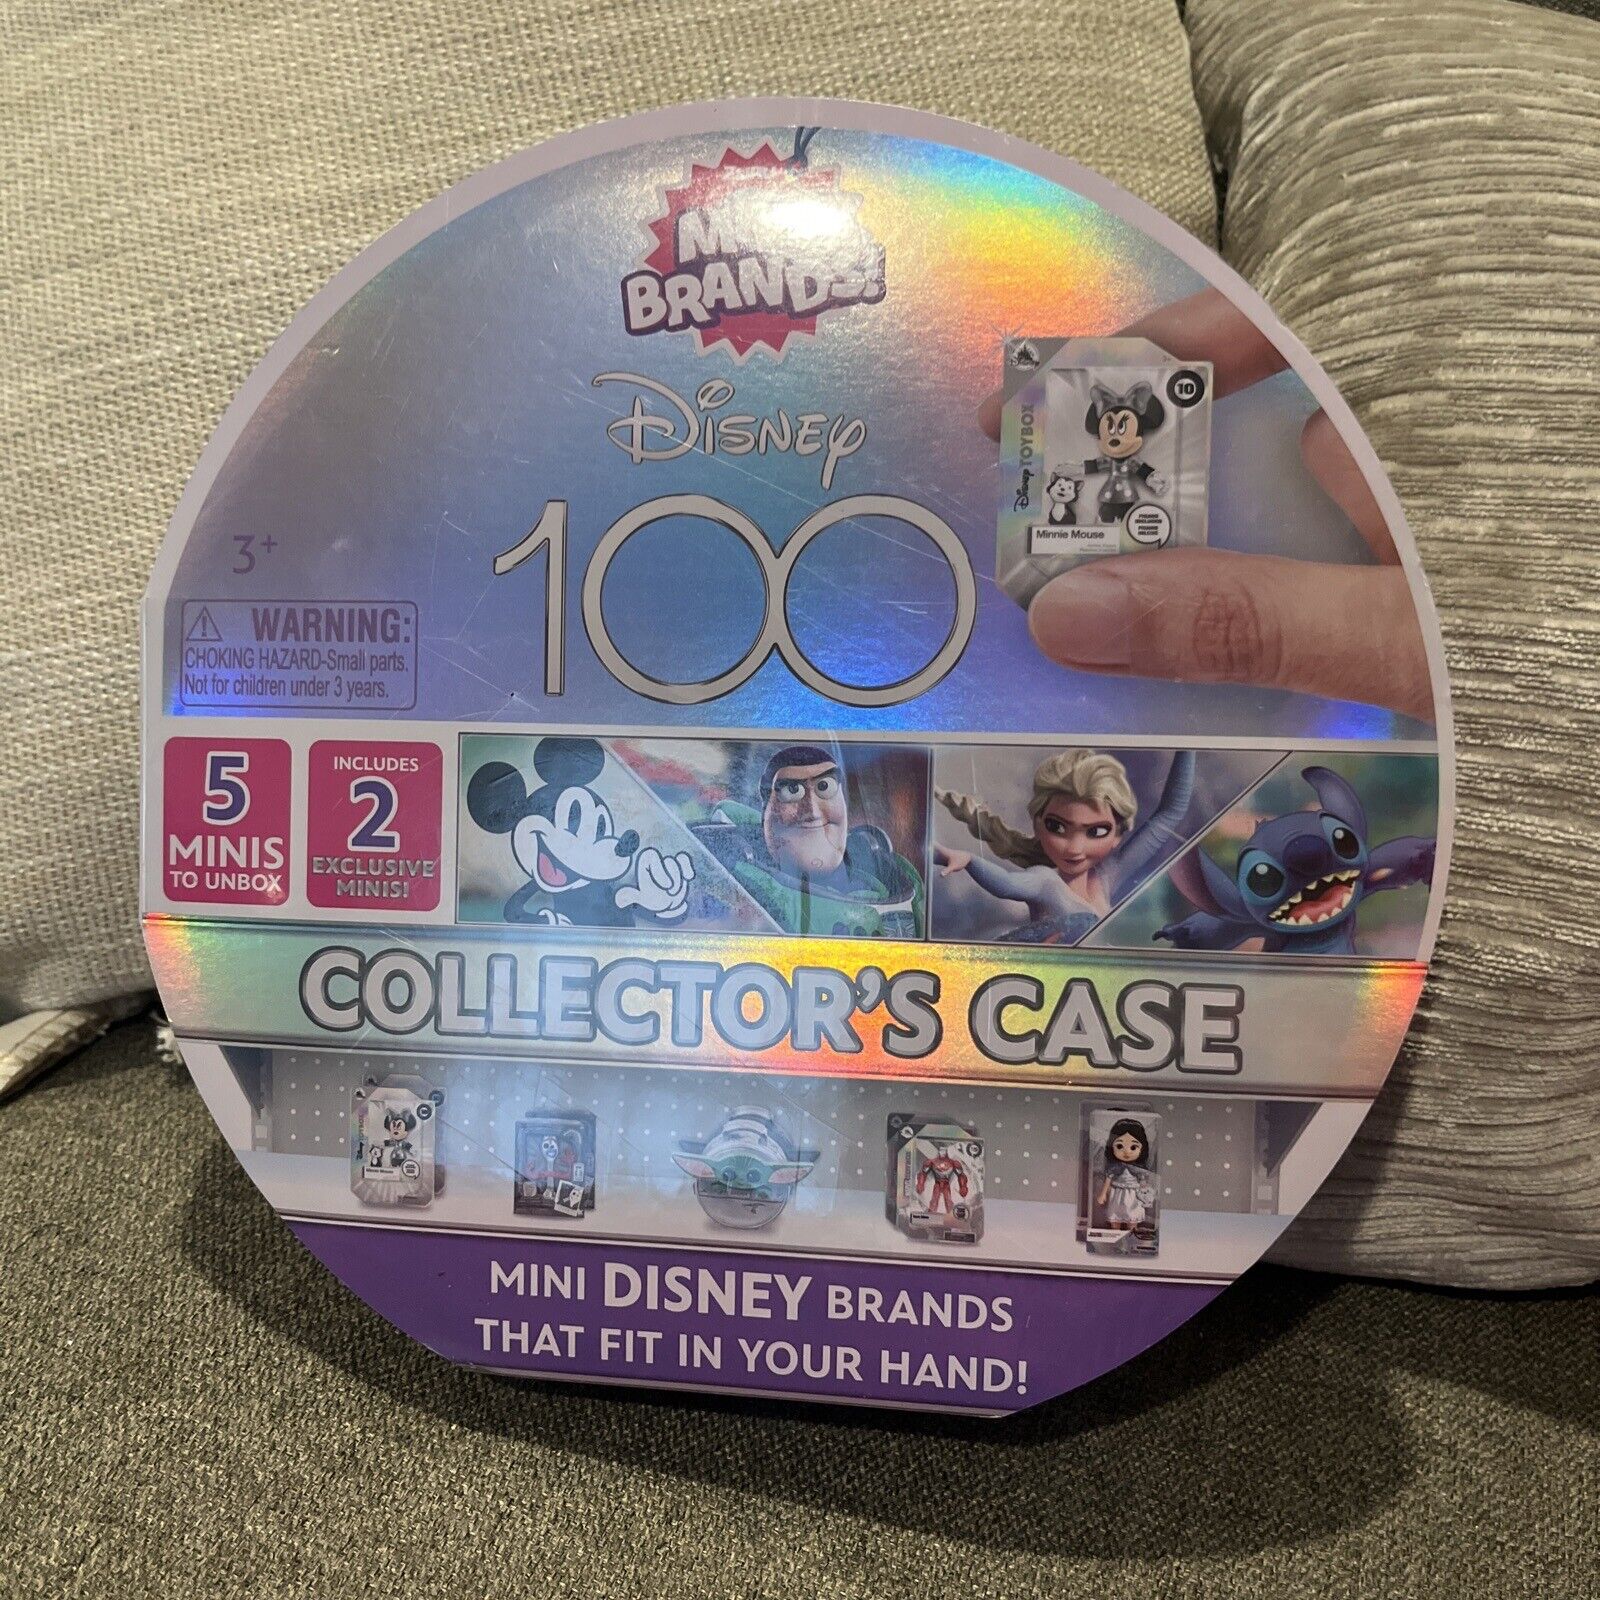 New in Plastic Disney 100 Mini Brands Collector’s Case includes 5 Minis